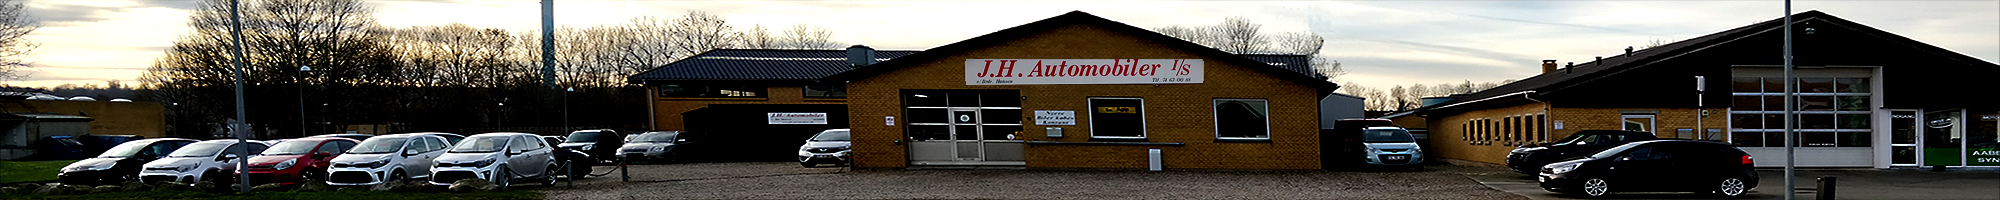 JH Automobiler